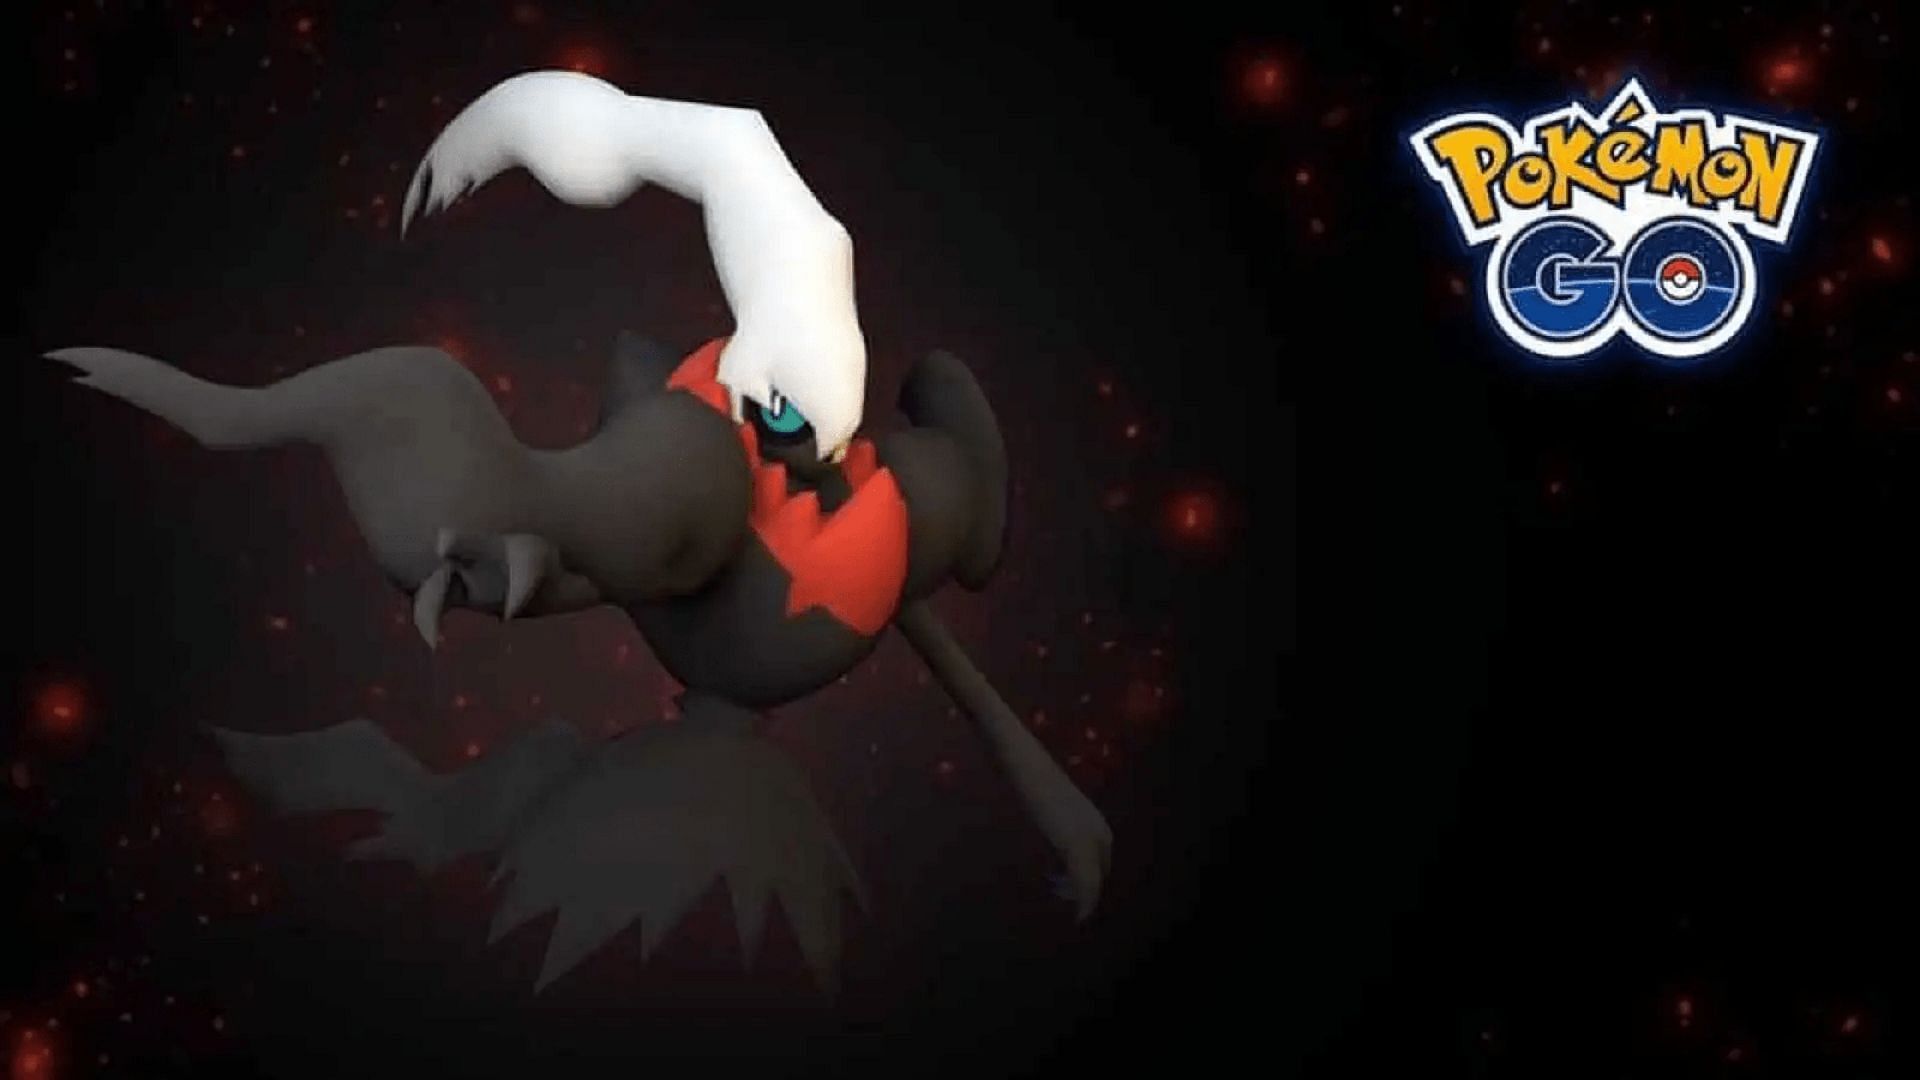 Pokémon Go Mega Banette counters, weaknesses and moveset explained